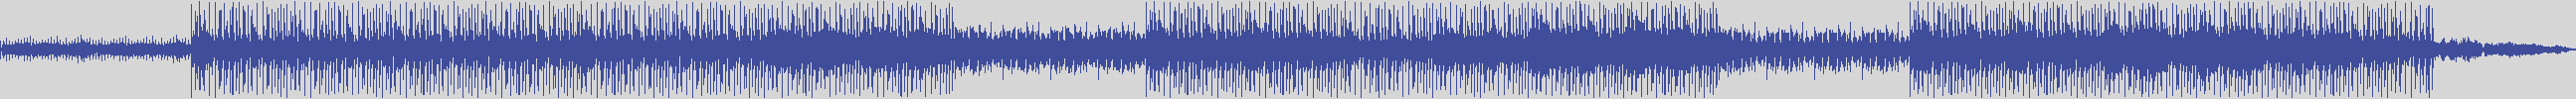 noclouds_chillout [NOC137] The Trax - Nefan [Original Mix] audio wave form